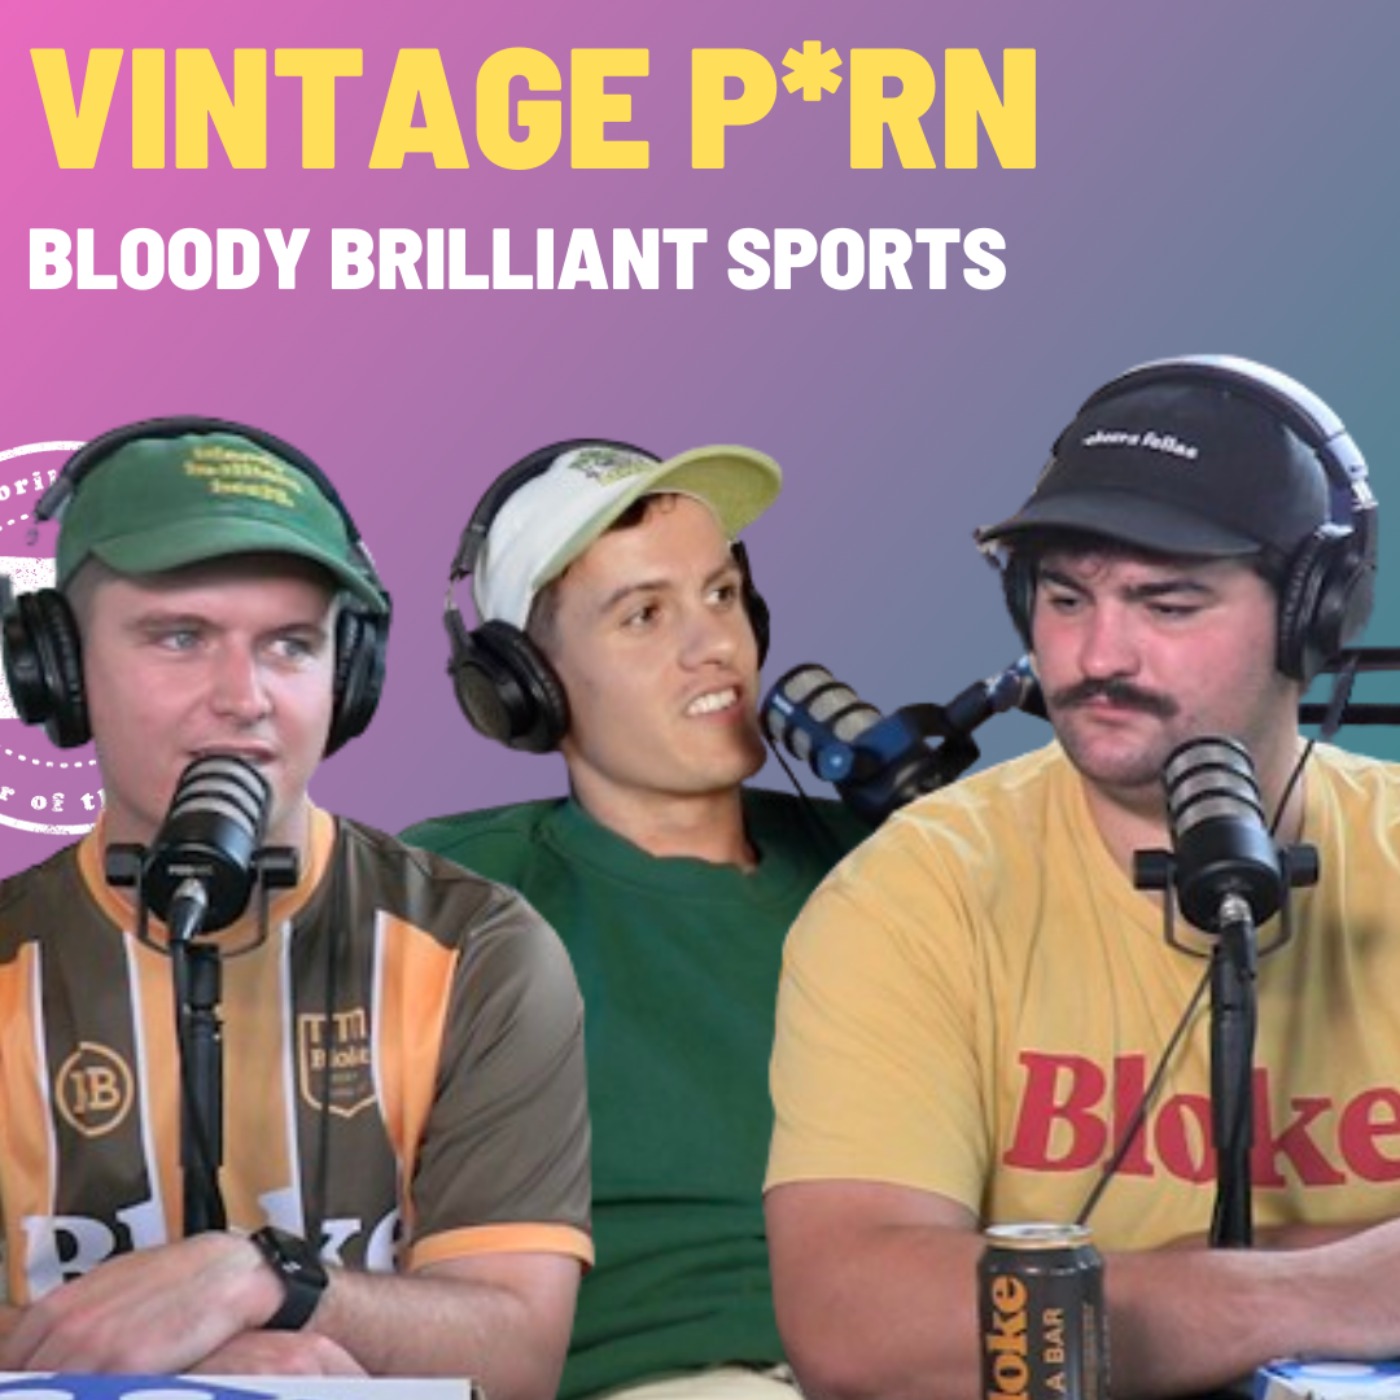 Vintage P*rn - Bloody Brilliant Sports